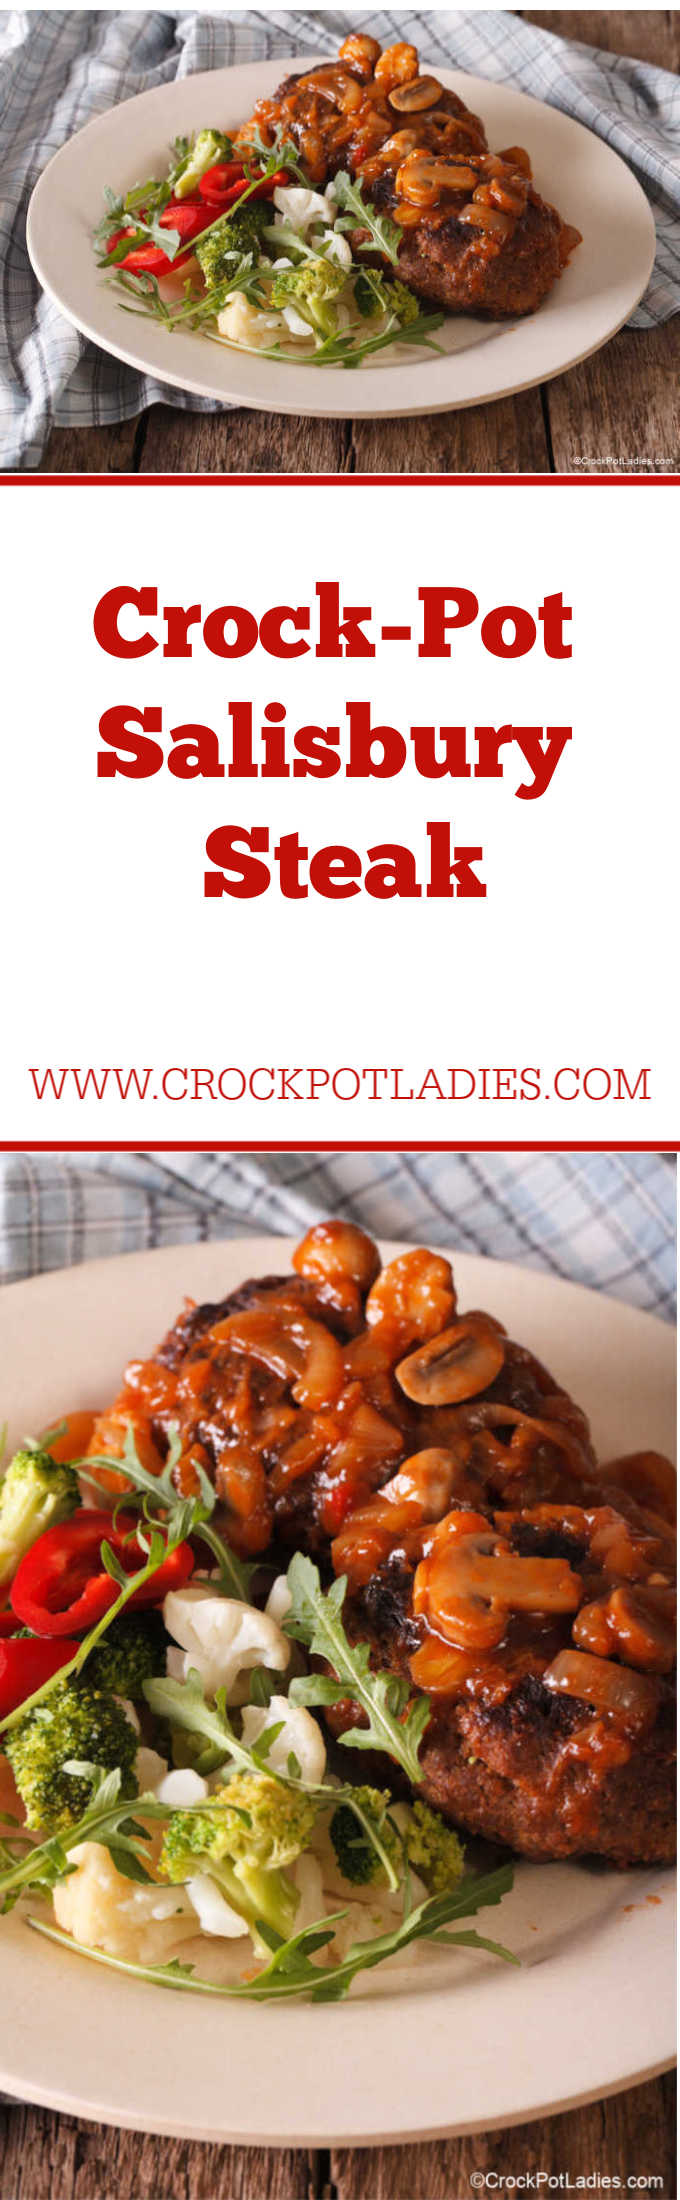 Crock-Pot Salisbury Steak